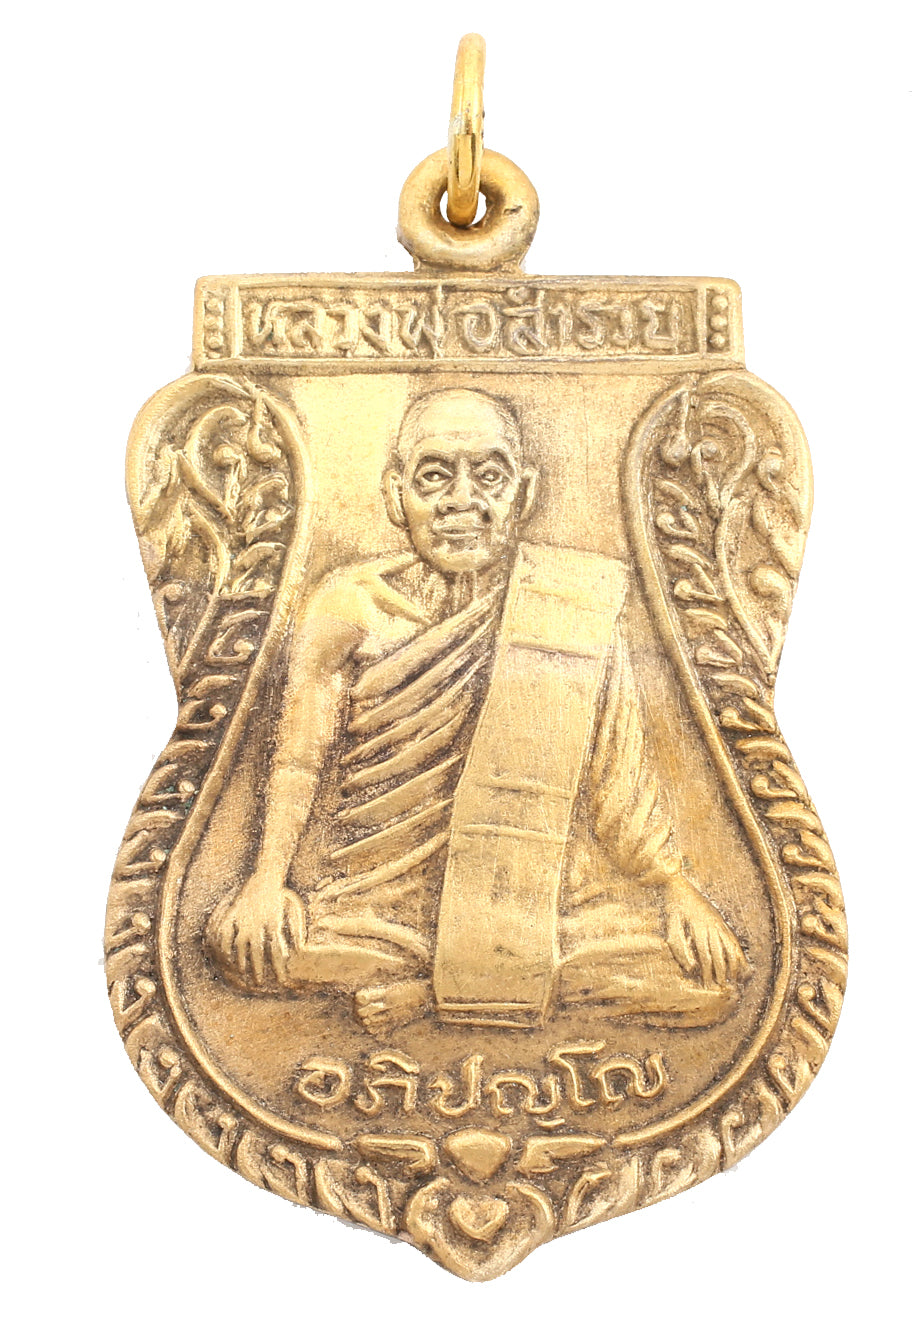 SIAMESE BUDDHIST MONK MEDAL - Fagan Arms